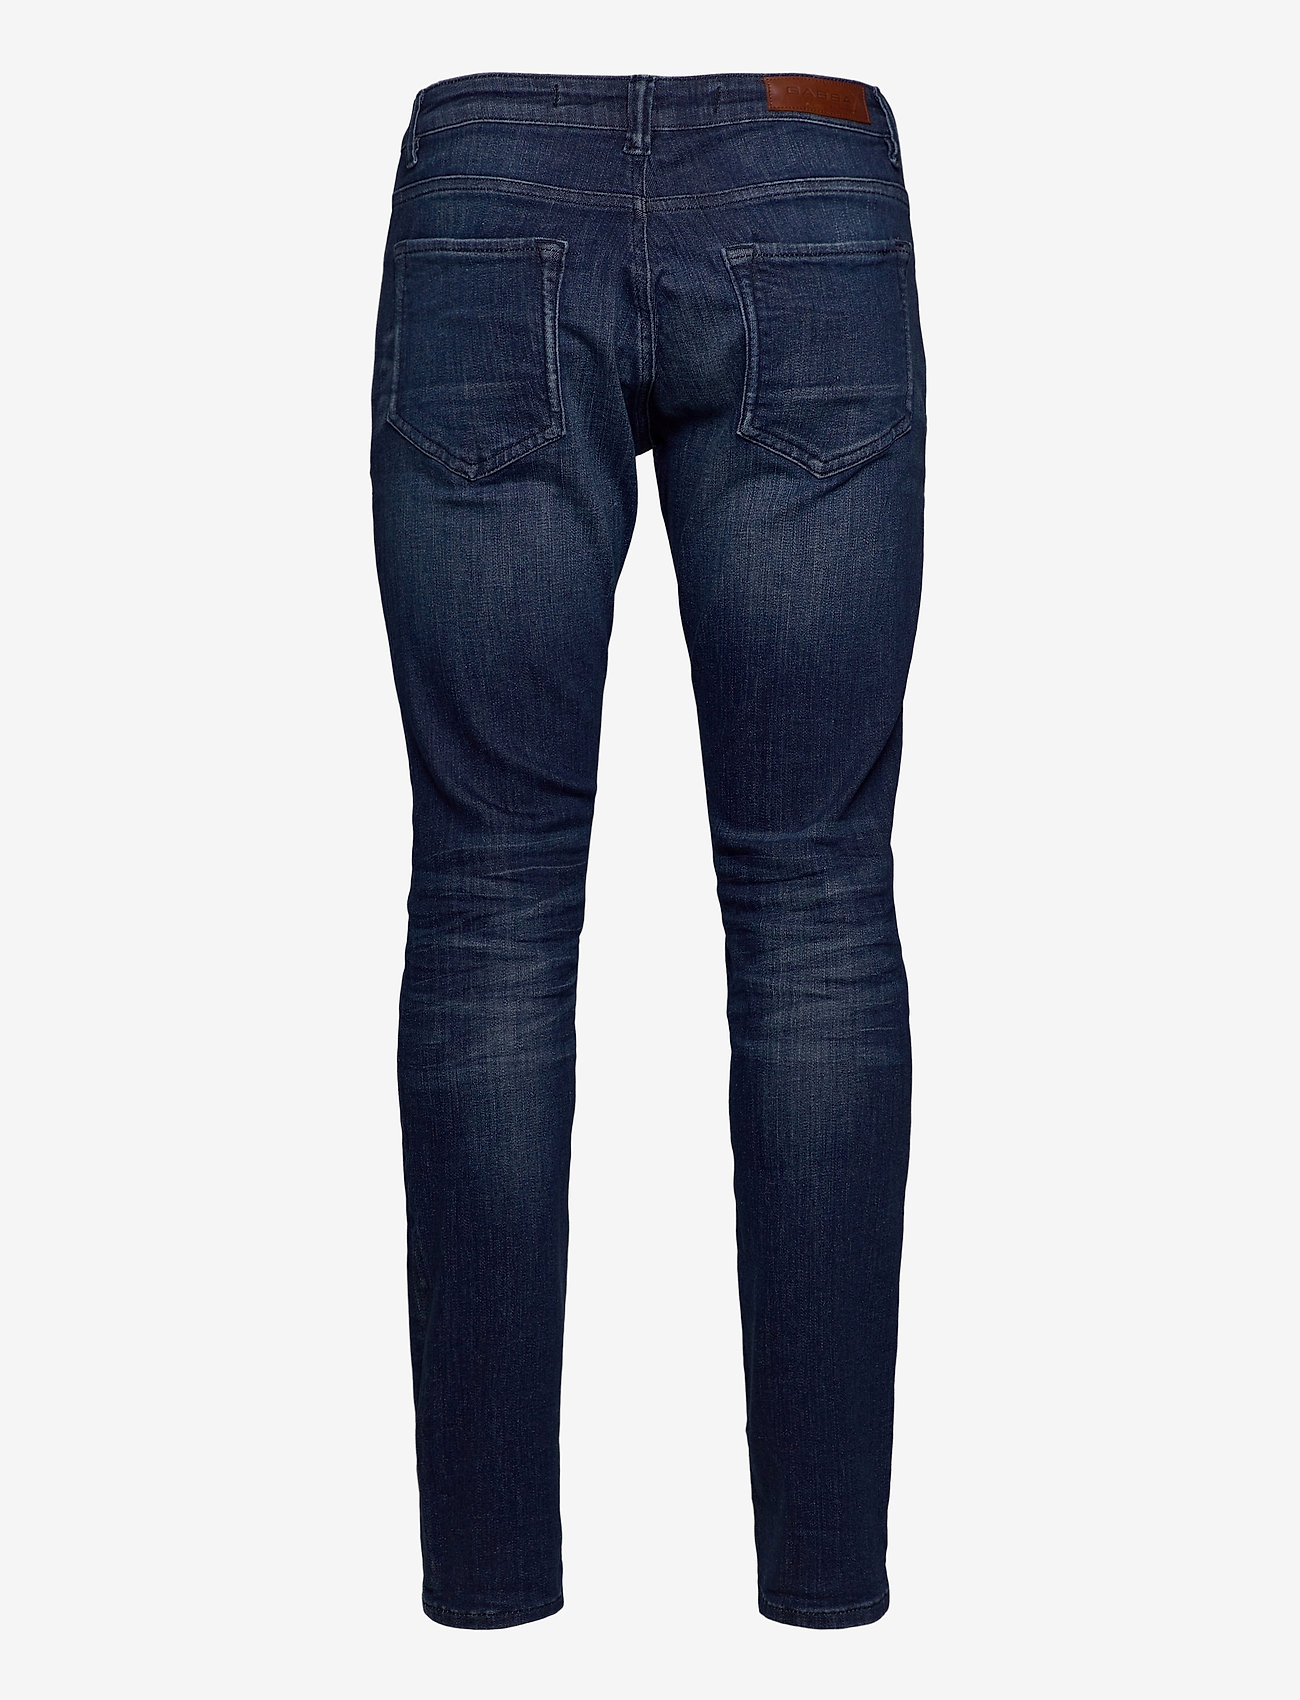 Gabba - Jones K3412 Dk. Jeans - skinny jeans - rs1328 - 1